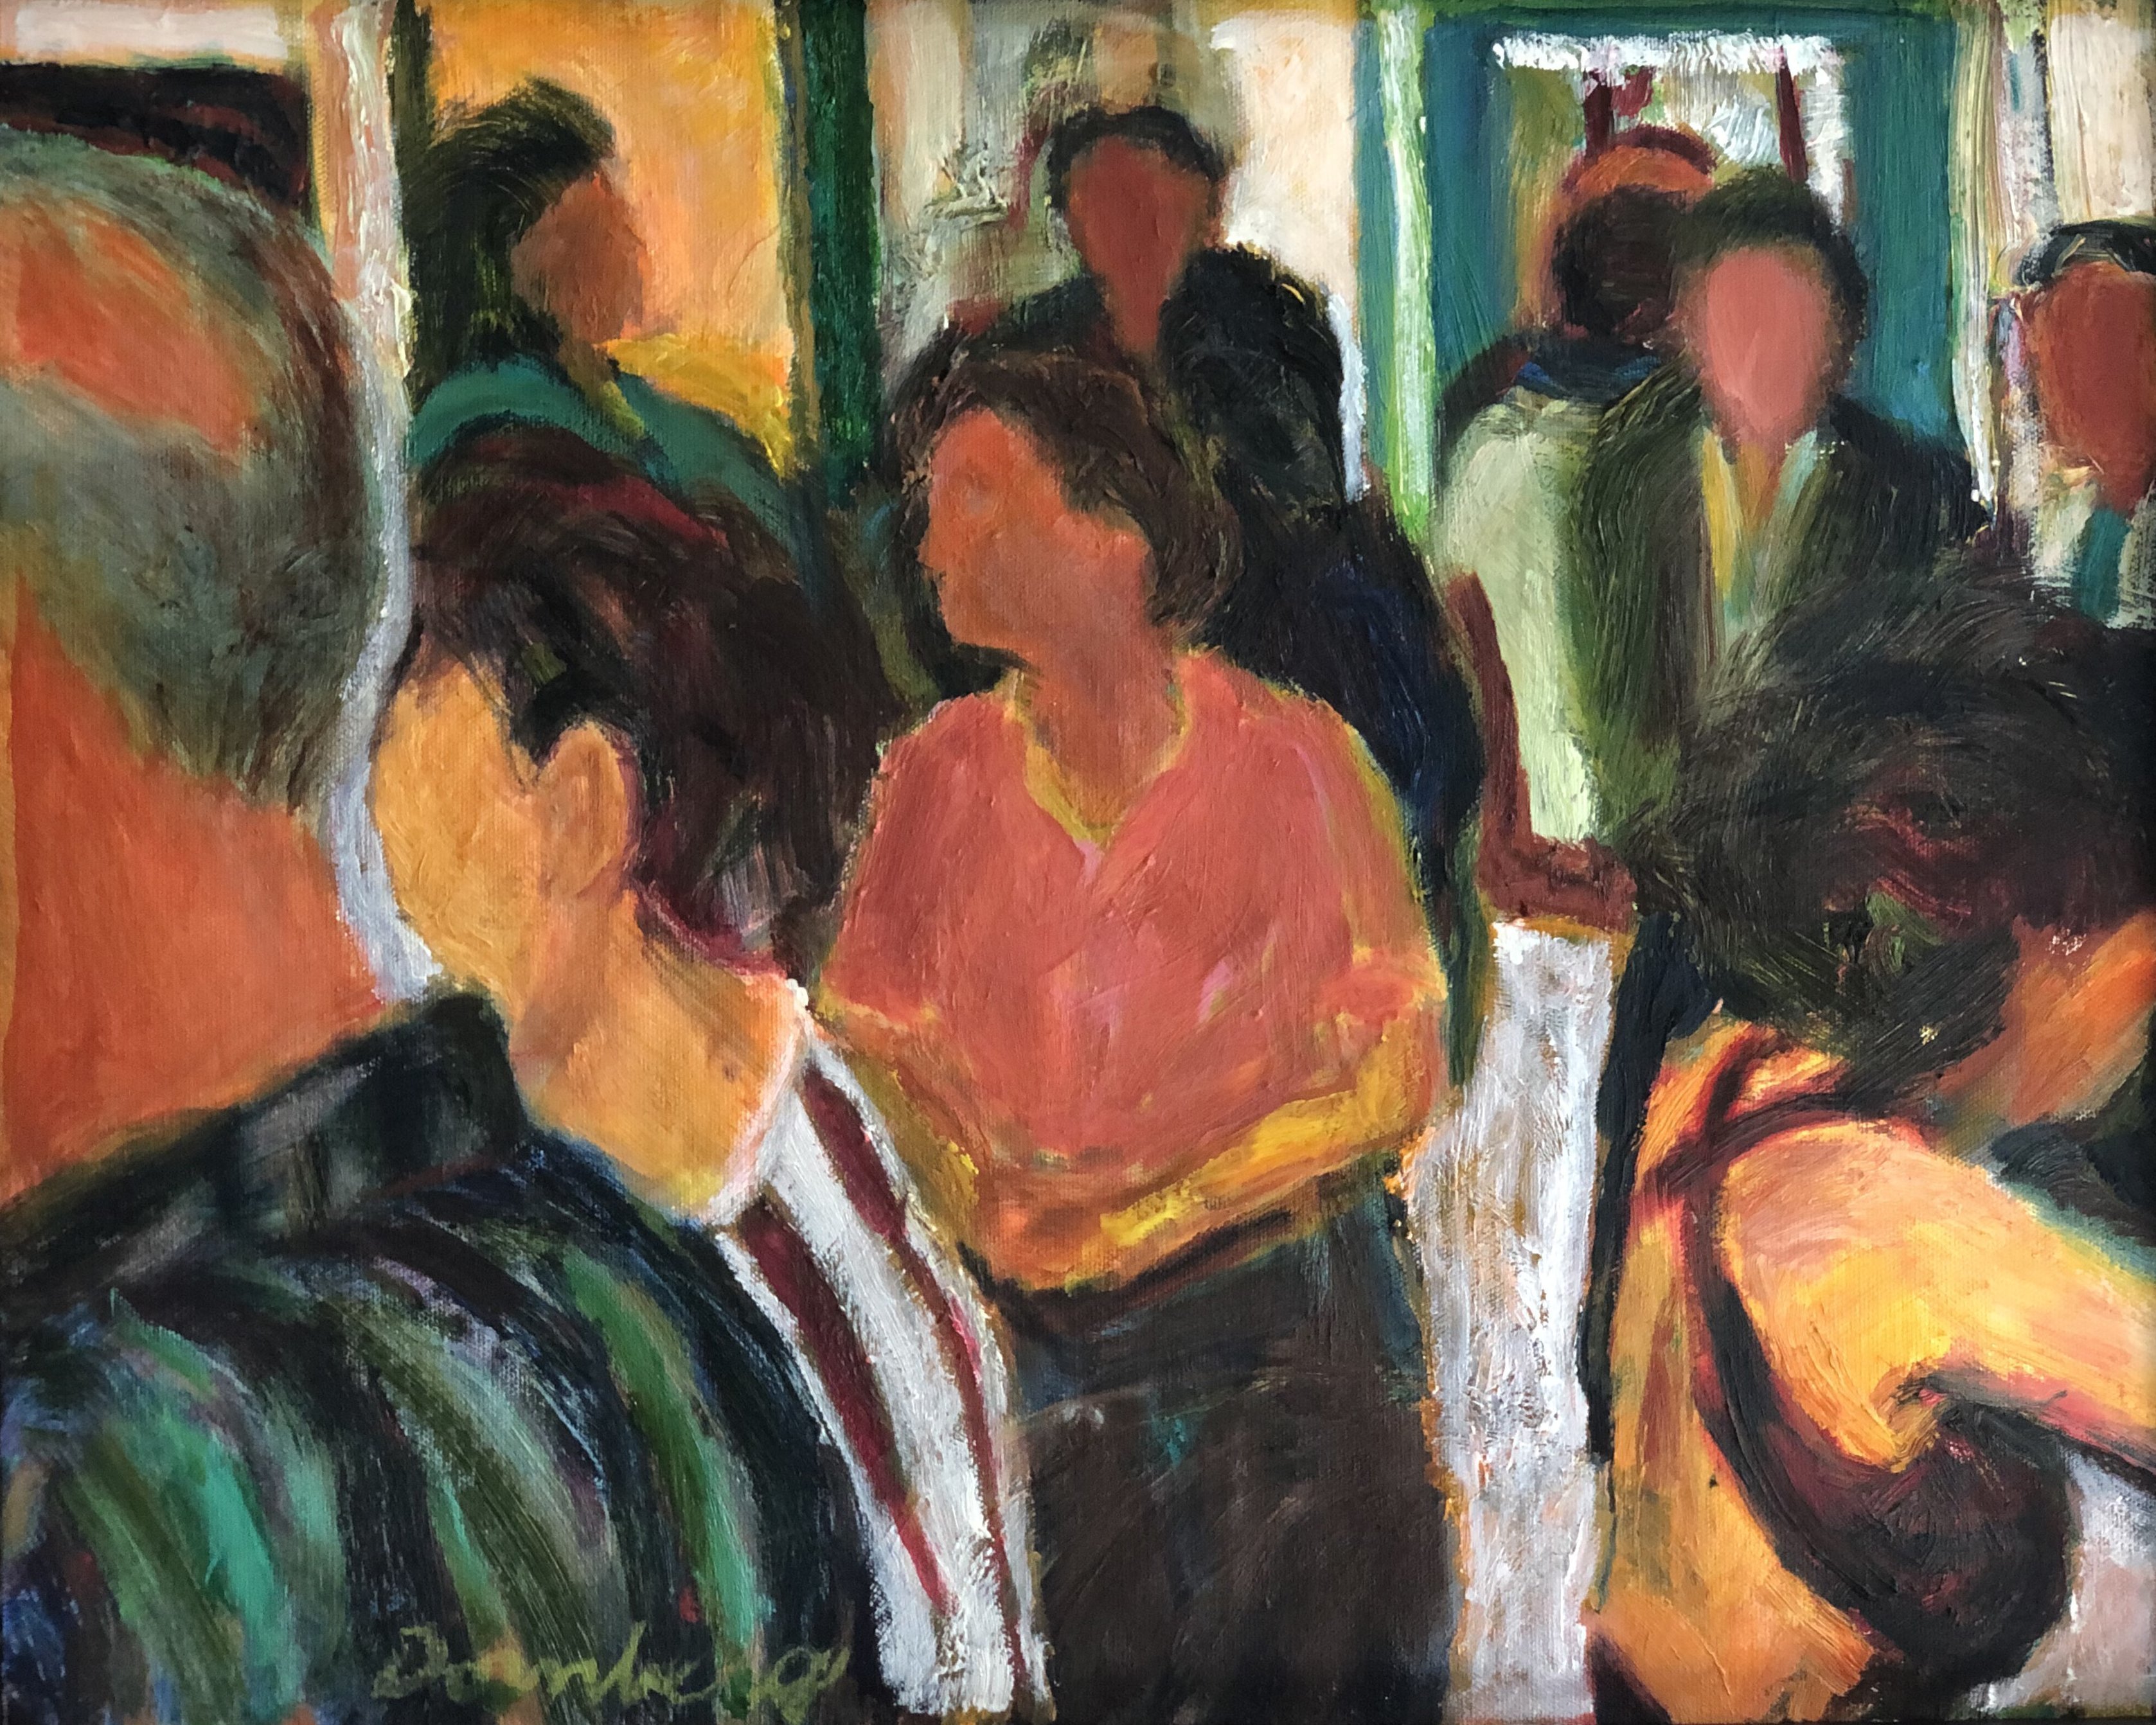 Bob Dornberg, 'Gallery Crowd', 2019, original Painting Oil, 20 x 16  x 1 inches. Artwork description: 3099 People admiring the artwork...